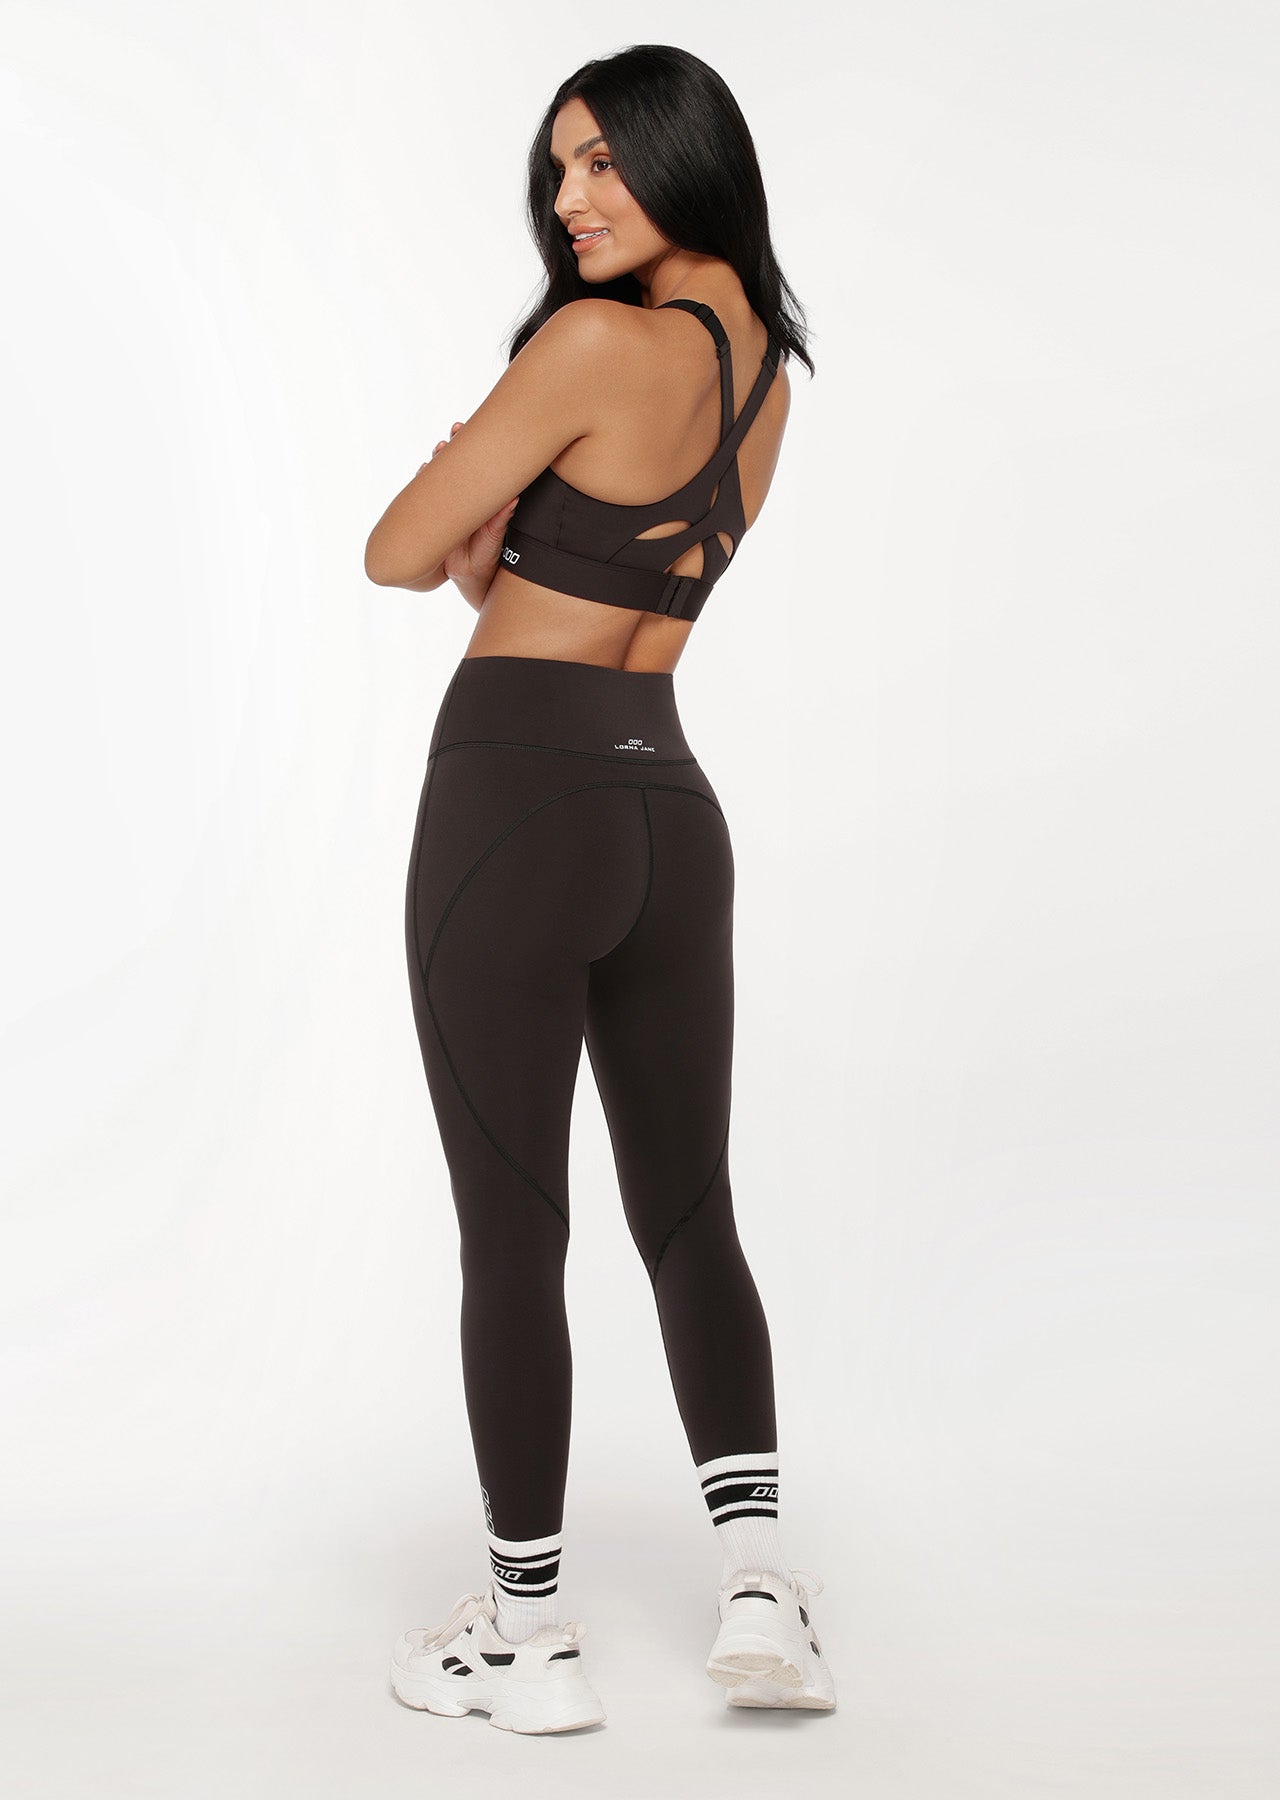 LORNA JANE BLACK Gym Workout Leggings Wet Look Size XXS $24.97 - PicClick AU